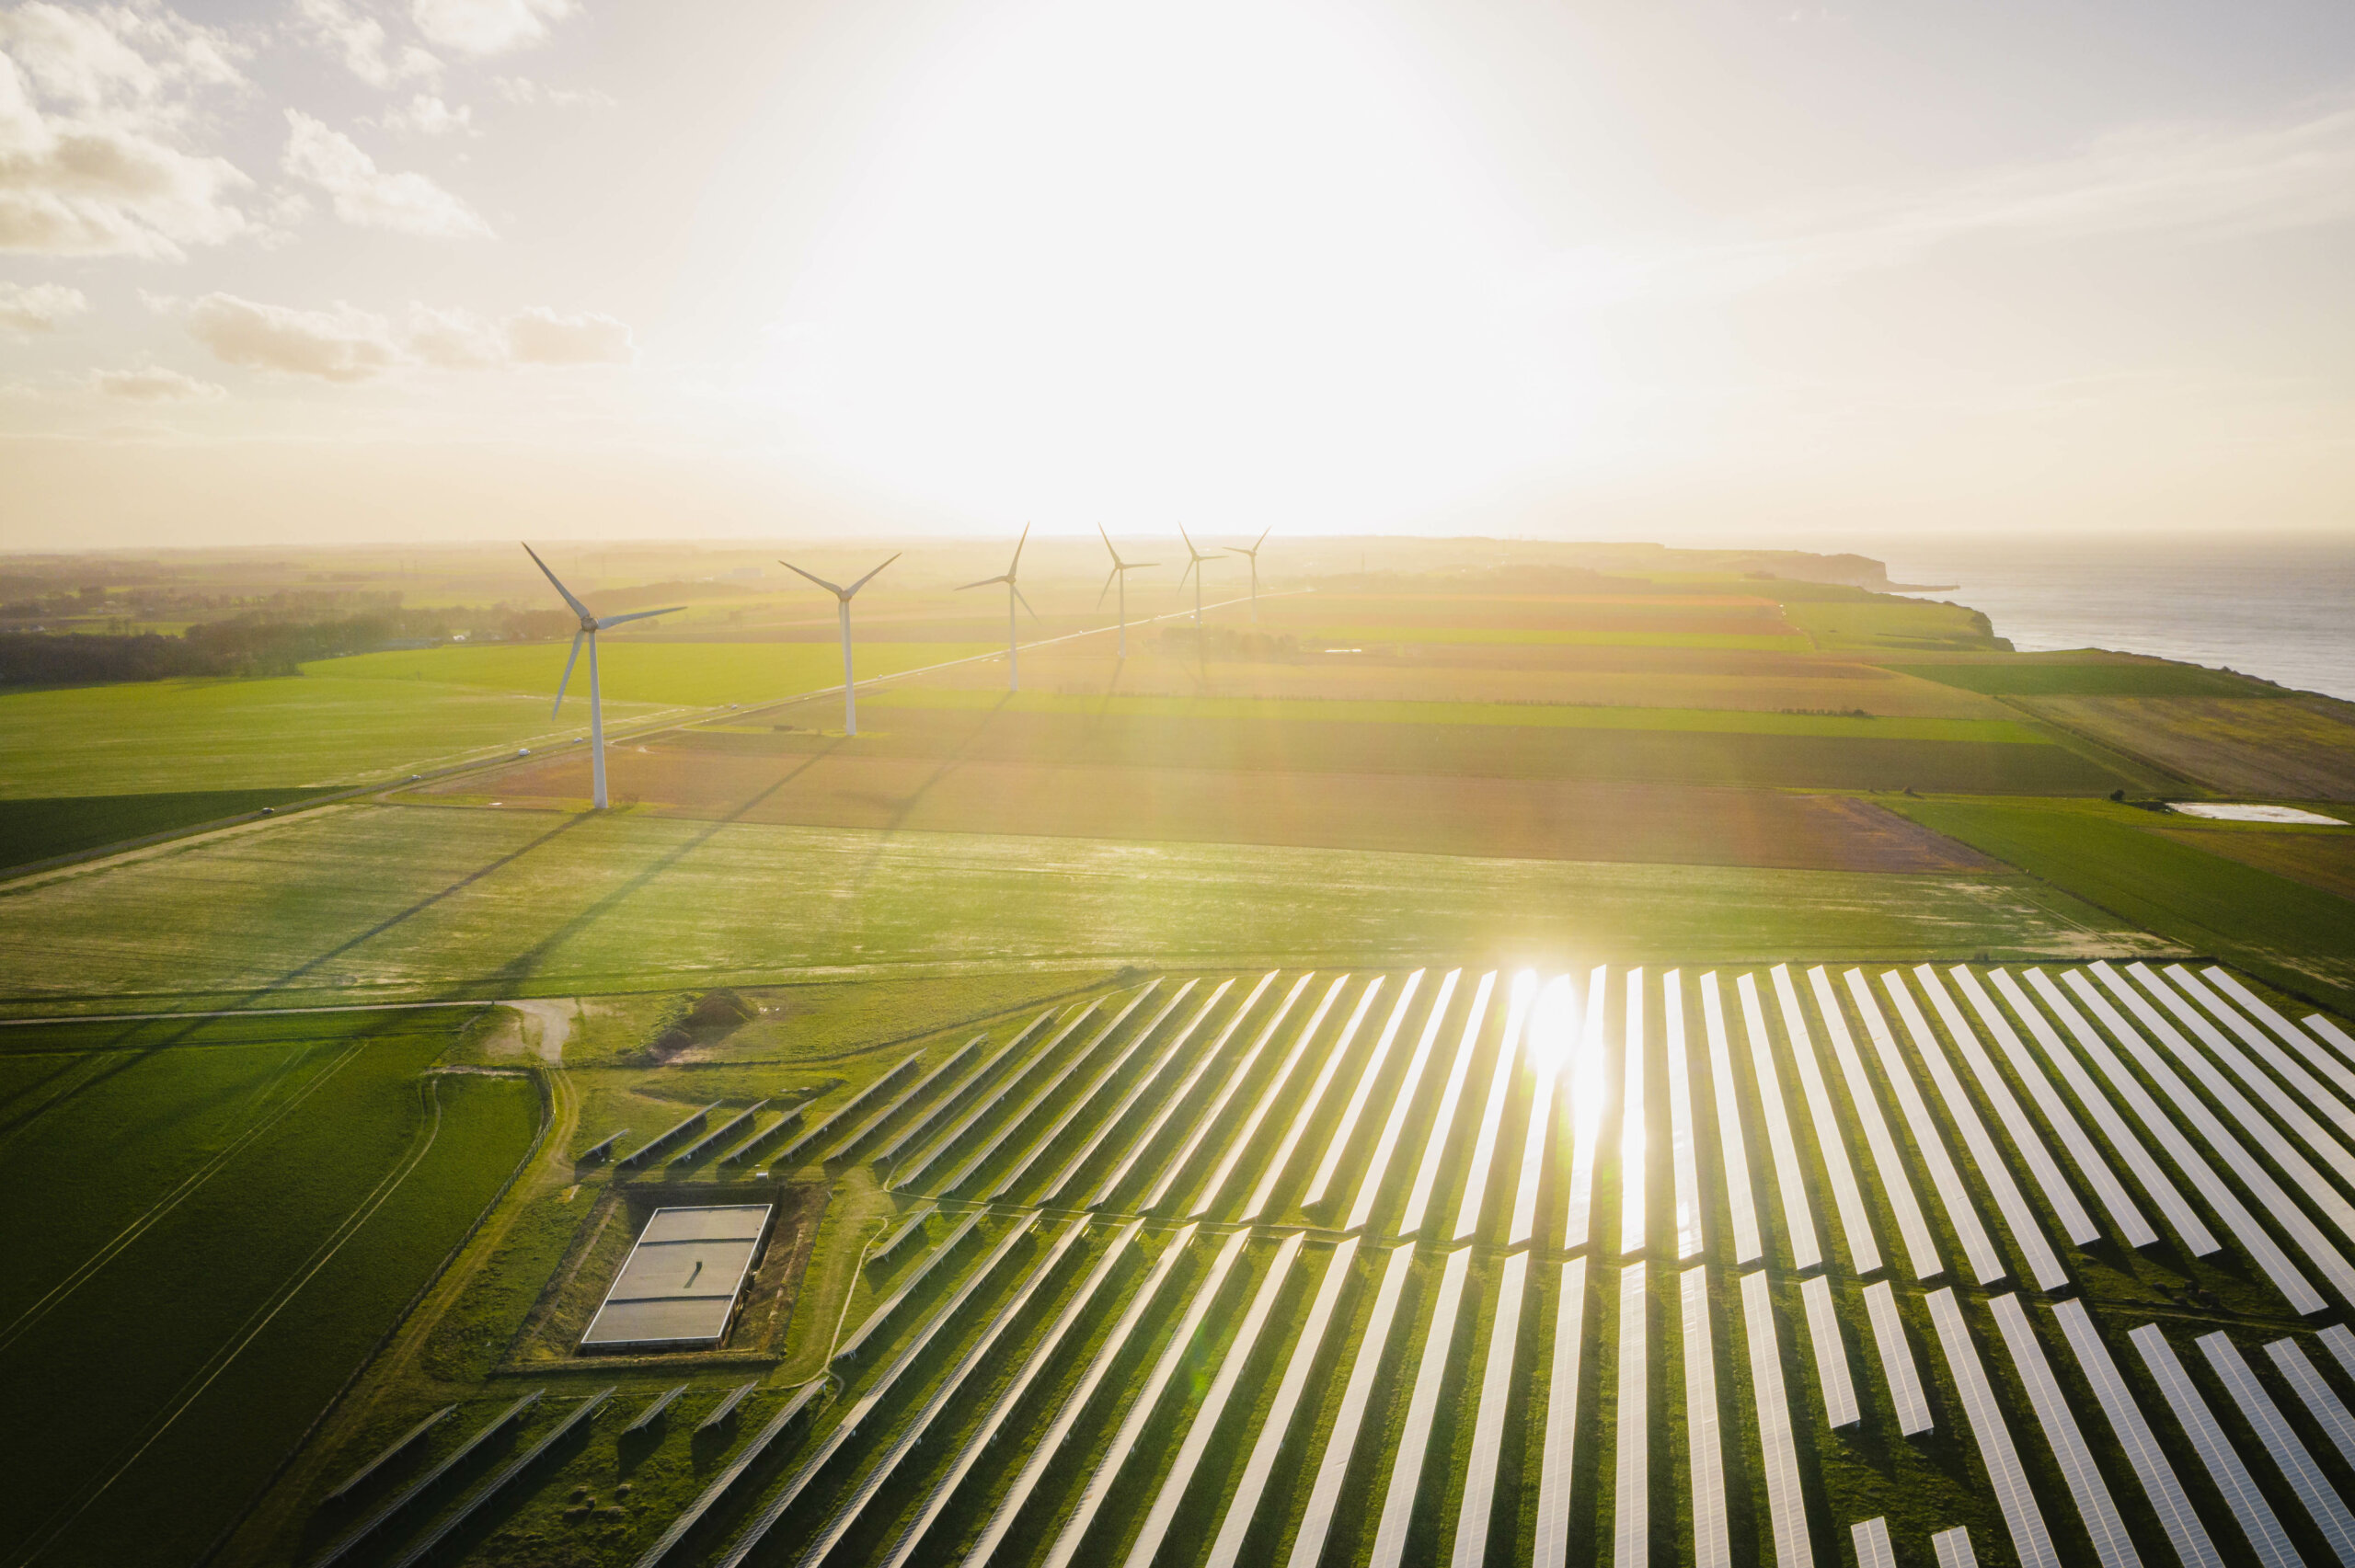 A field of renewable green energy